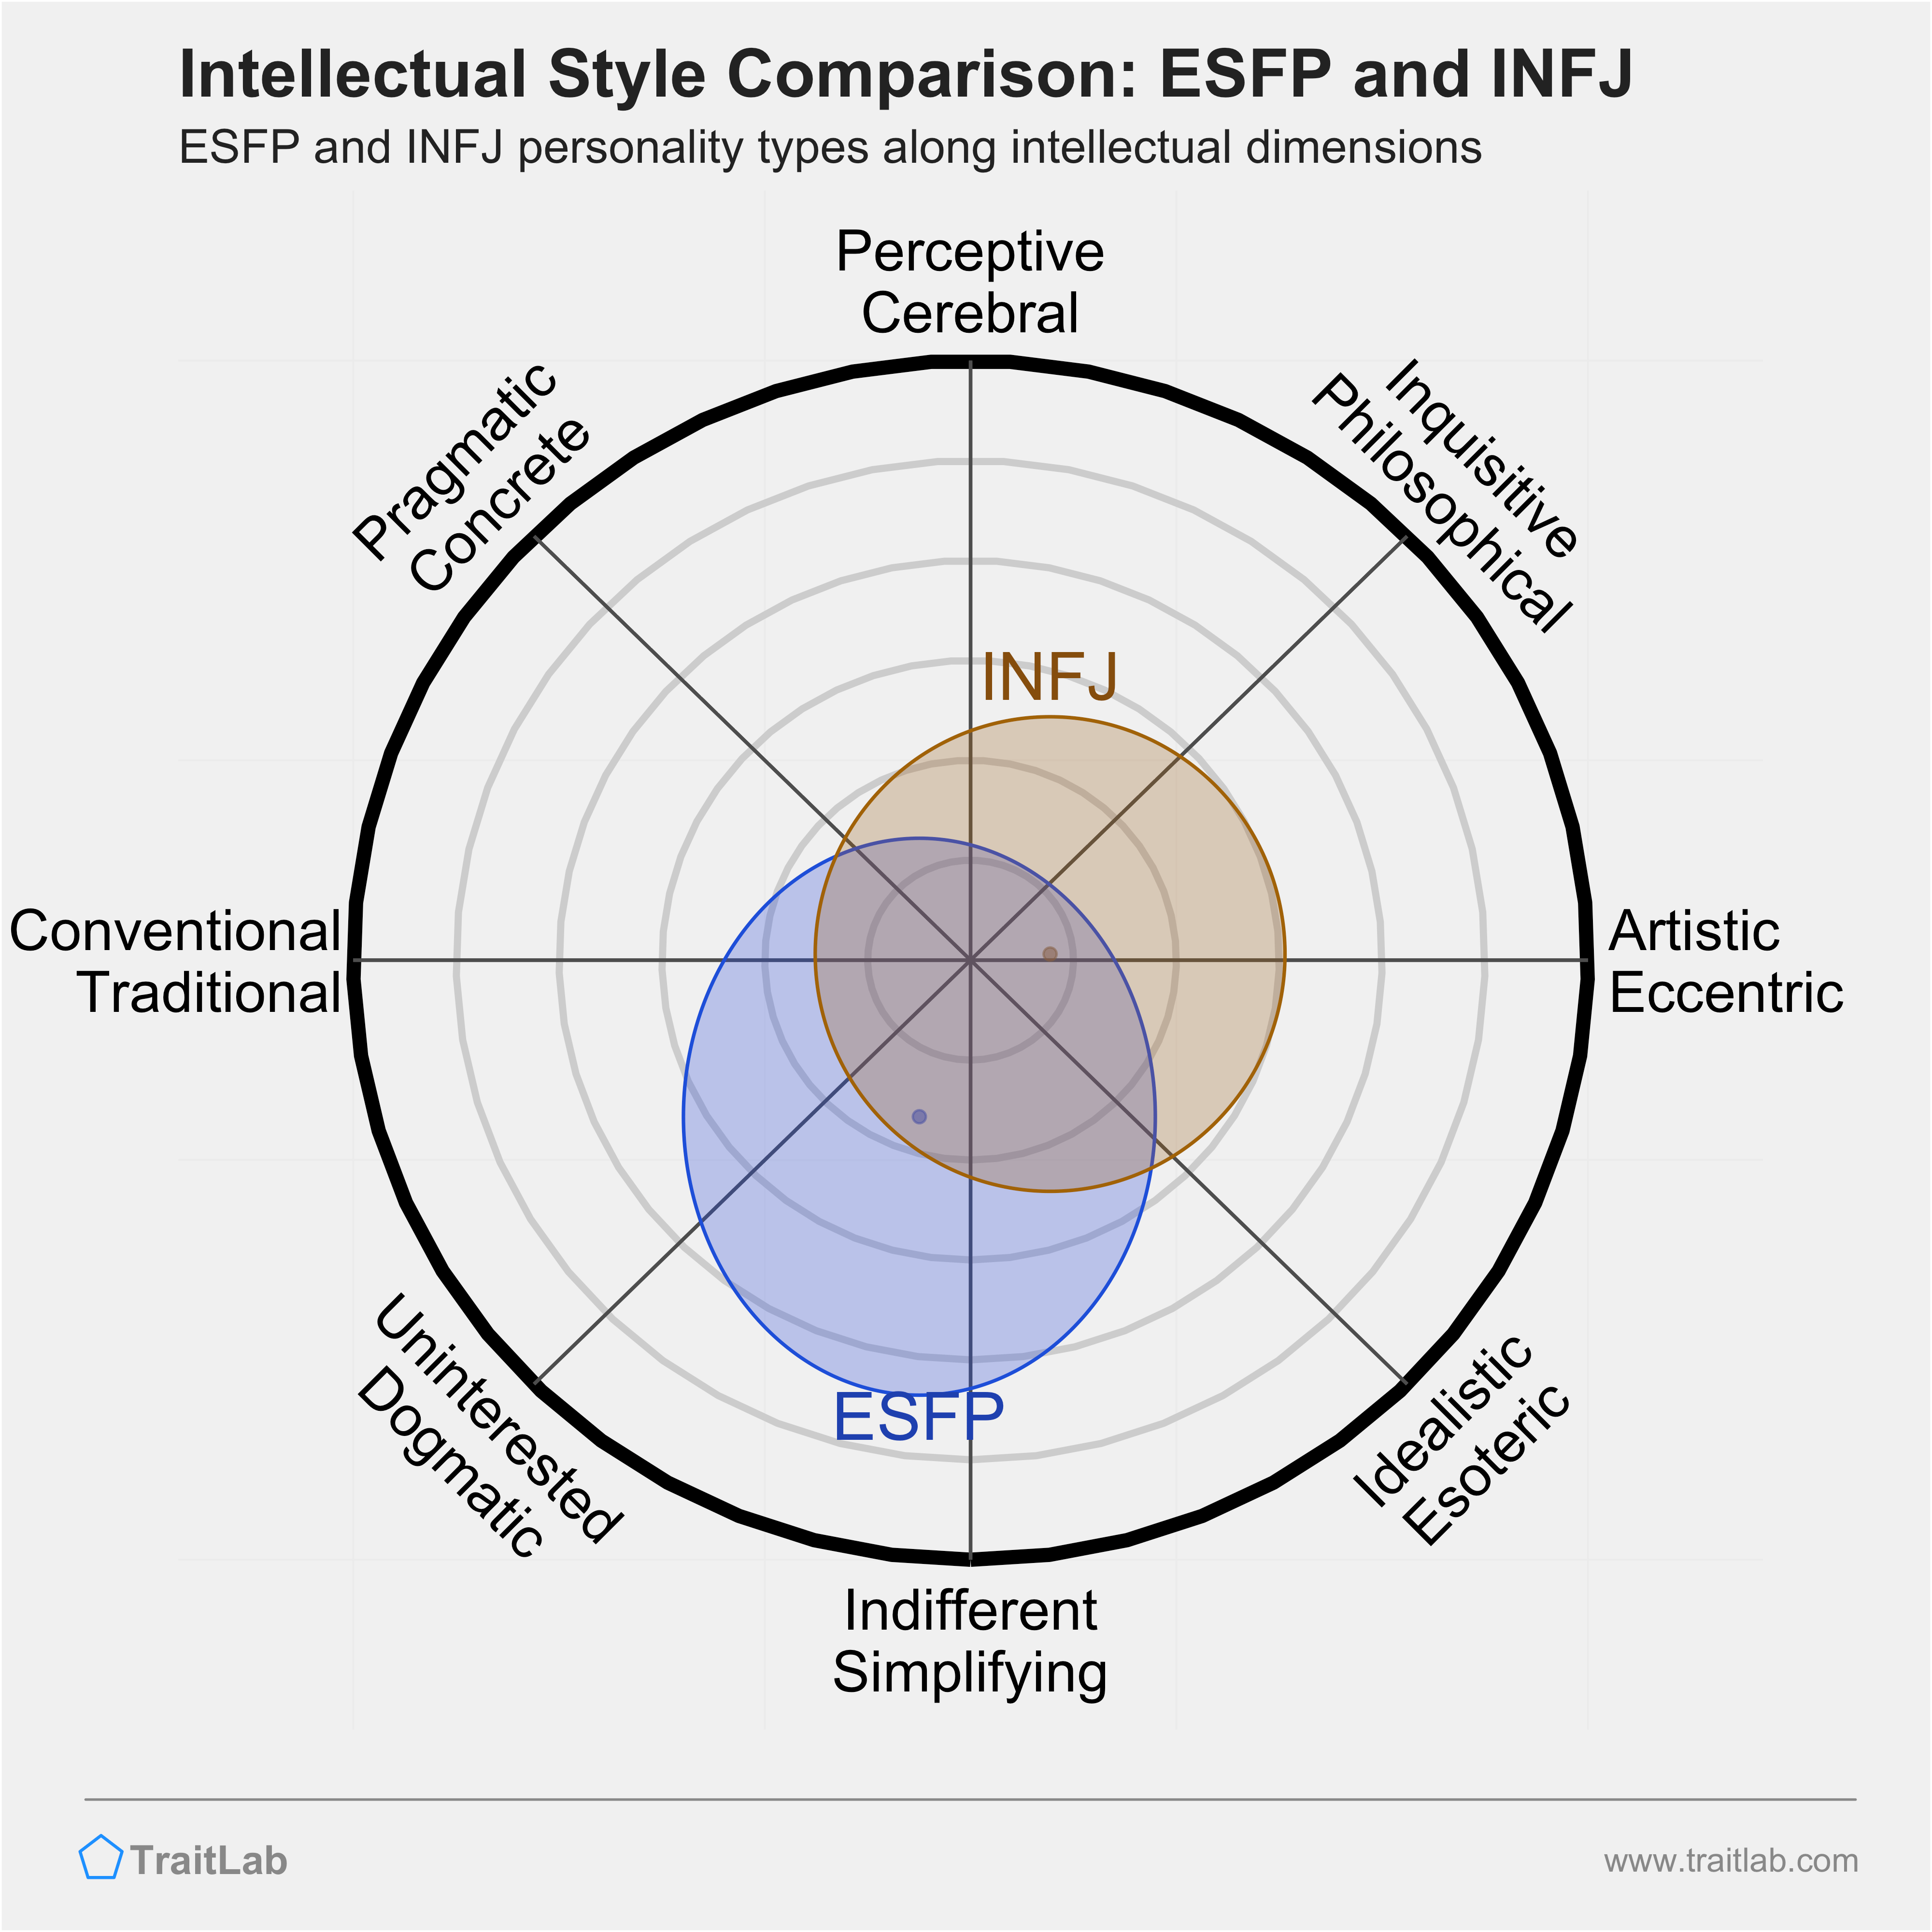 ESFP and INFJ comparison across intellectual dimensions